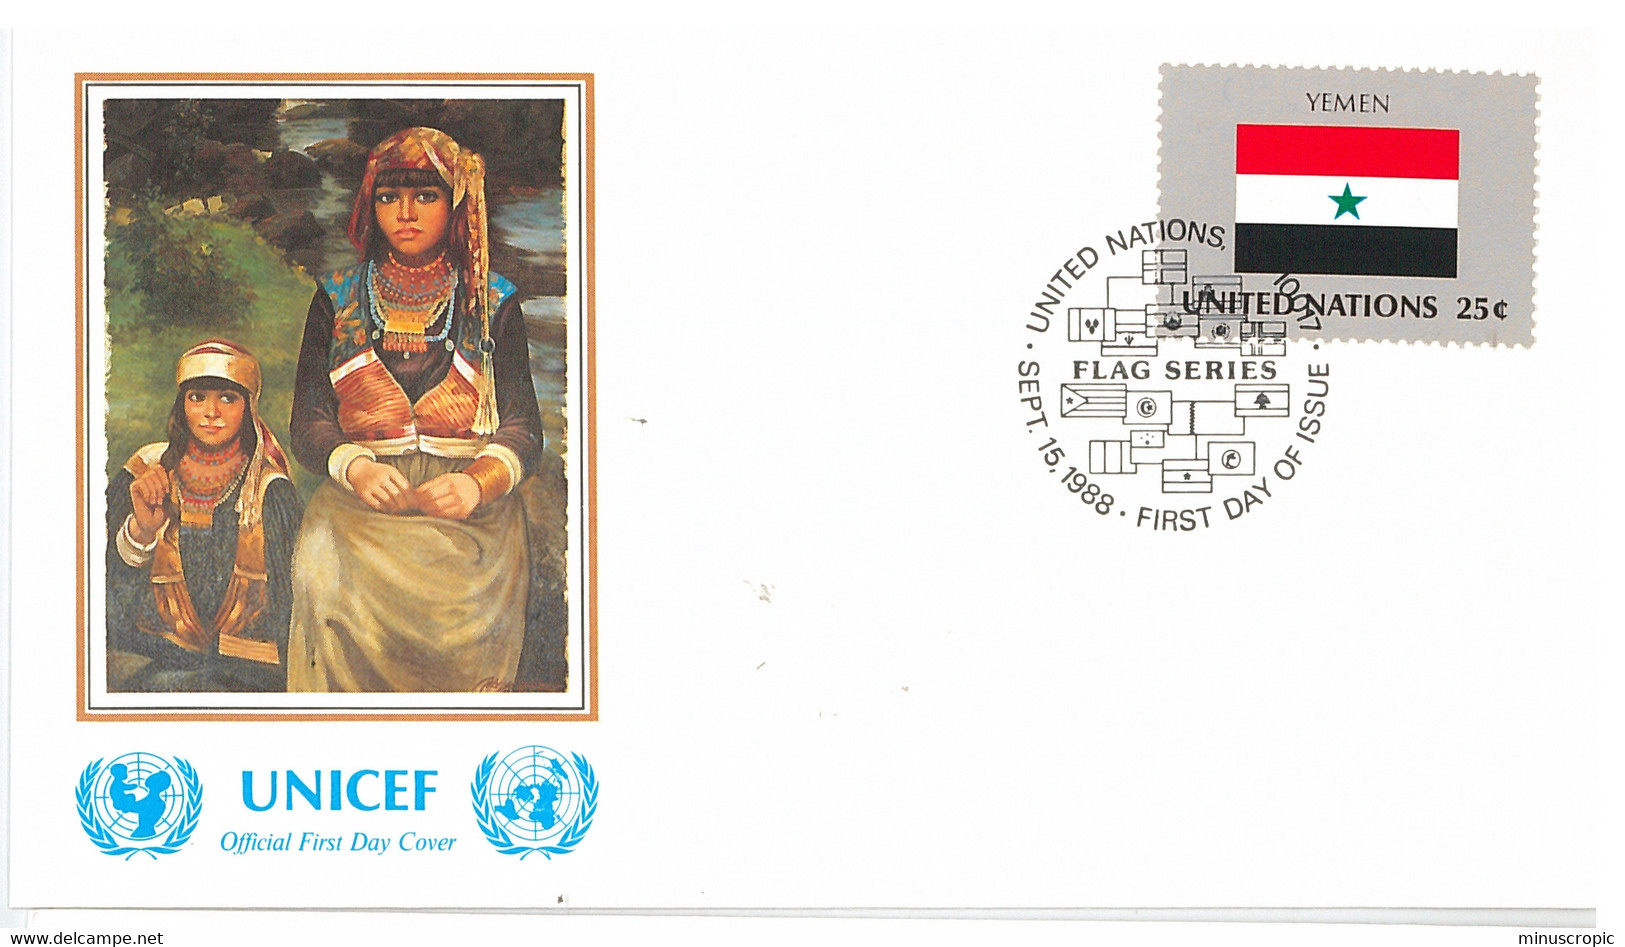 Enveloppe FDC United Nations - UNICEF - Flag Series 15/88 - Yemen - 1988 - Covers & Documents